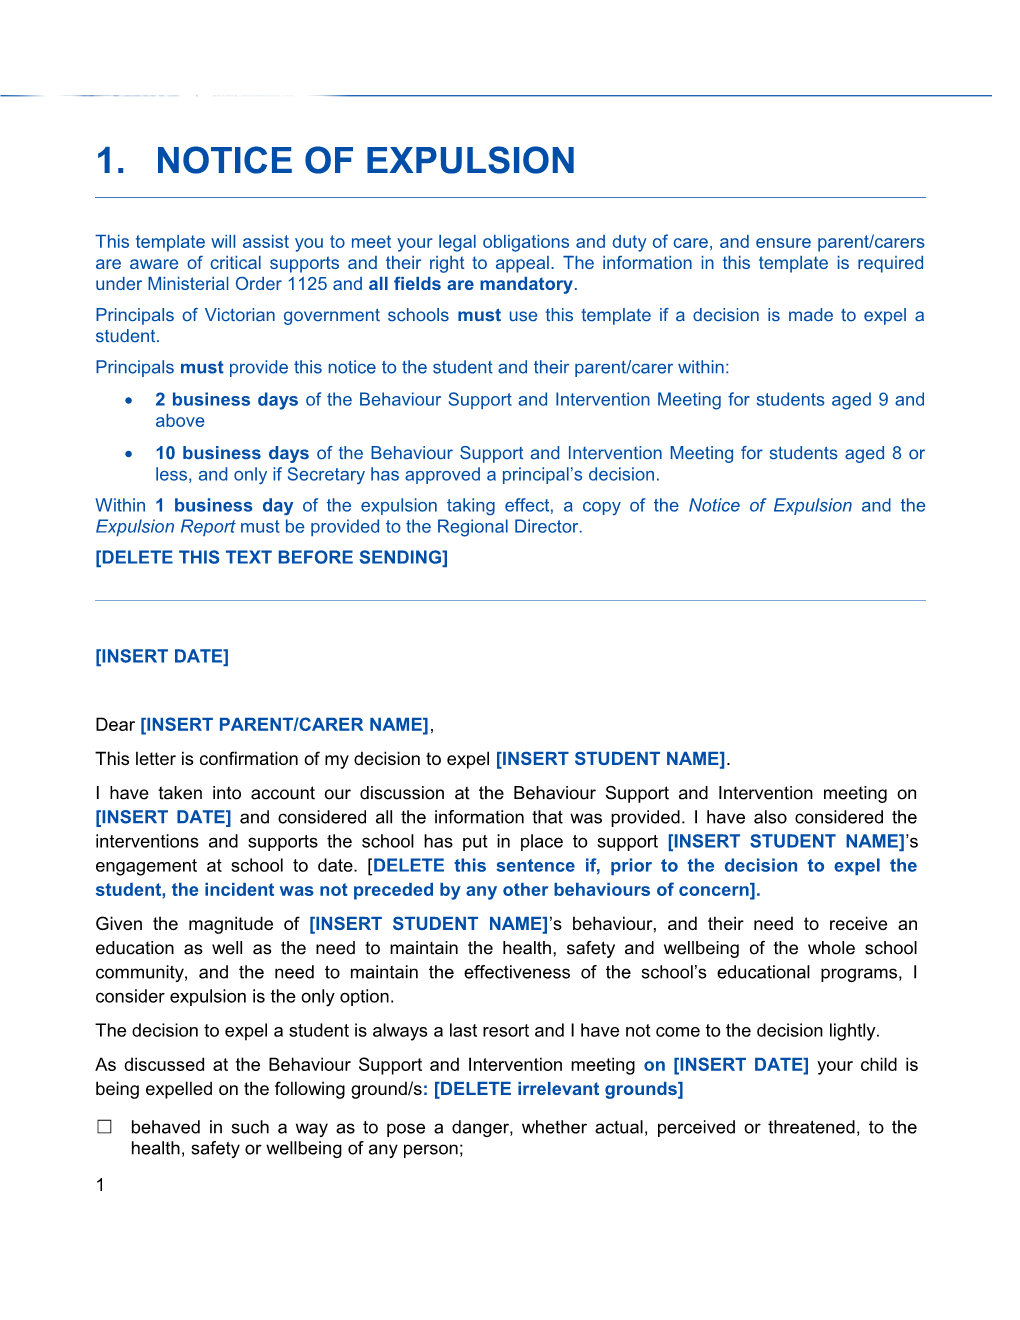 Notice of Expulsion